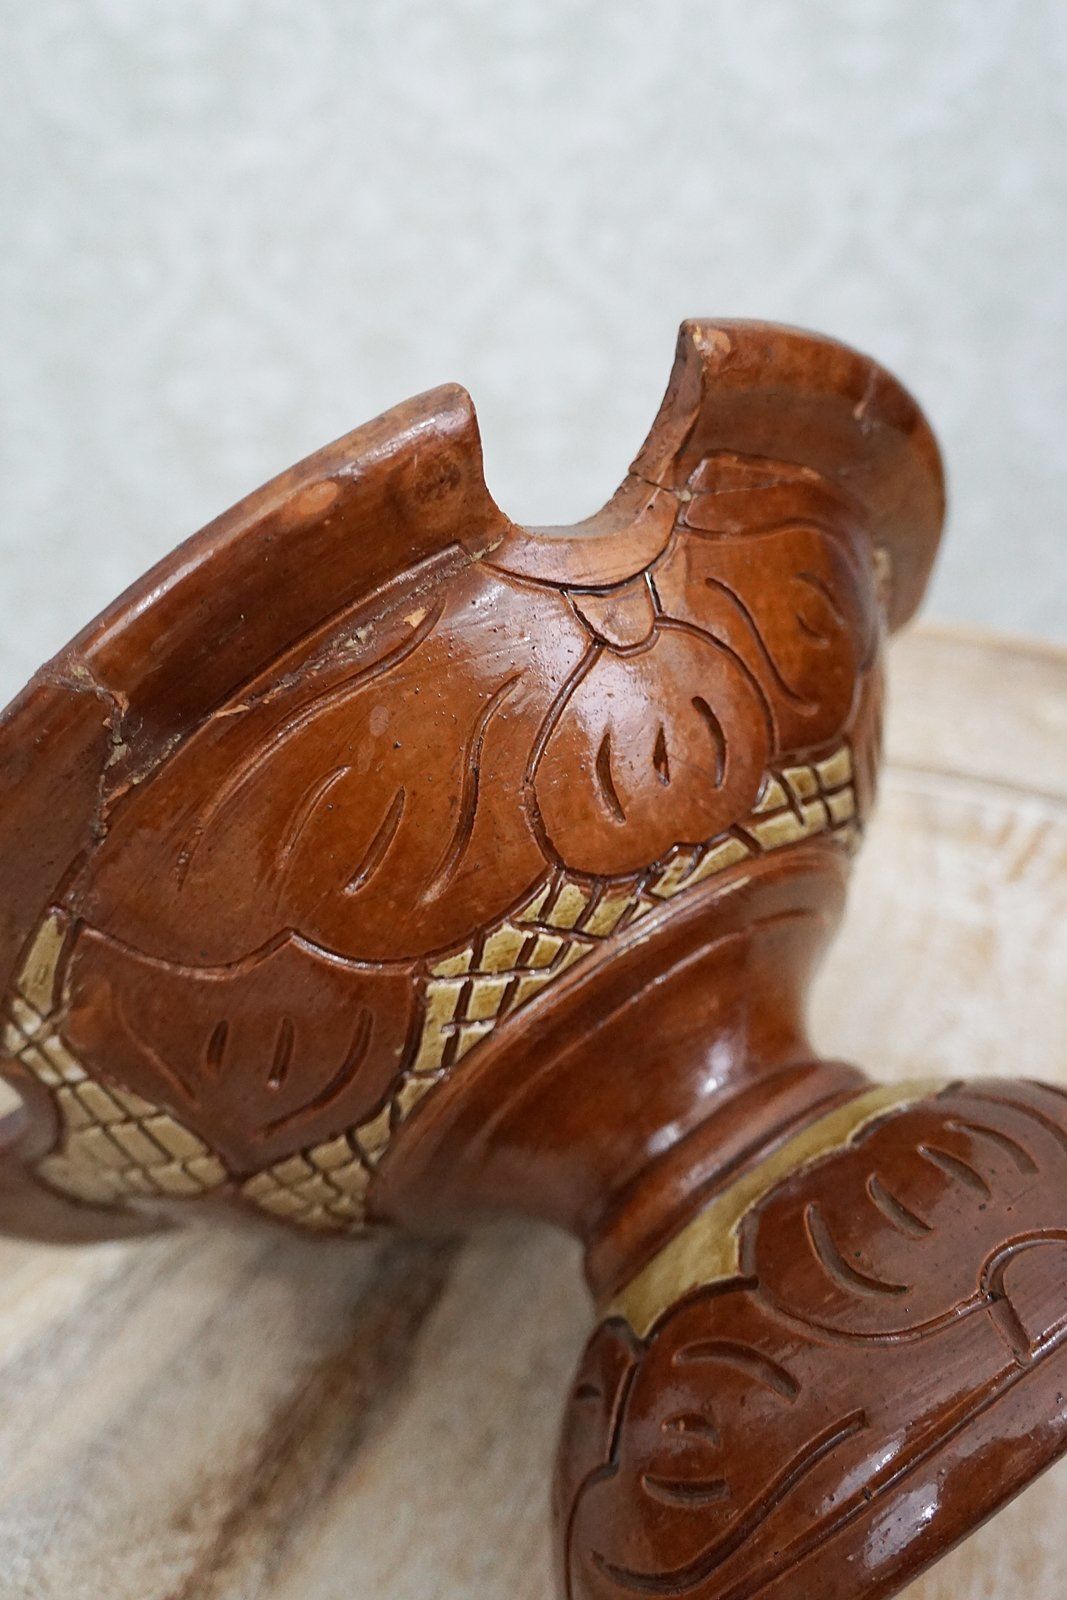 Vintage Handmade Primitive Ceramic Bowl-closiTherapi | vinTage